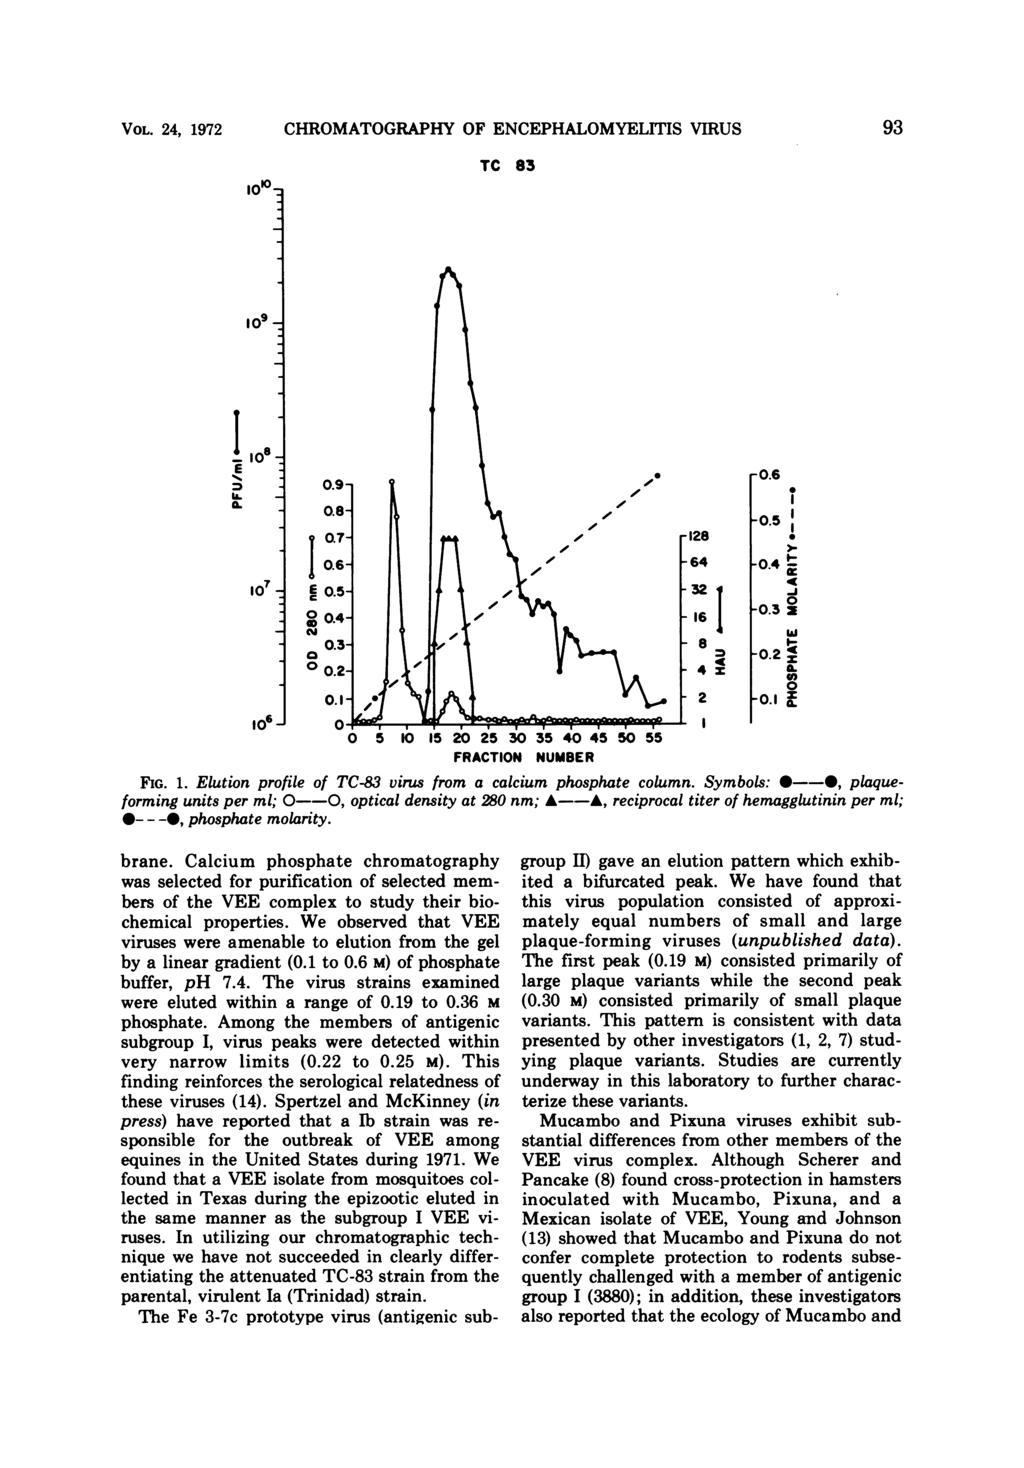 VOL. 24, 1972 1 CHROMATOGRAPHY OF ENCEPHALOMYELITIS VIRUS TC 83 93 9-1 - L. 7 II 4 N cam 16 8 4 I -.6.54 -i -.3 z -.2! -.1IL 2 6o- 5 1 15 2 25 3 35 4 45 5 55 FIG. 1. Elution profile of TC-83 virus from a calcium phosphate column.